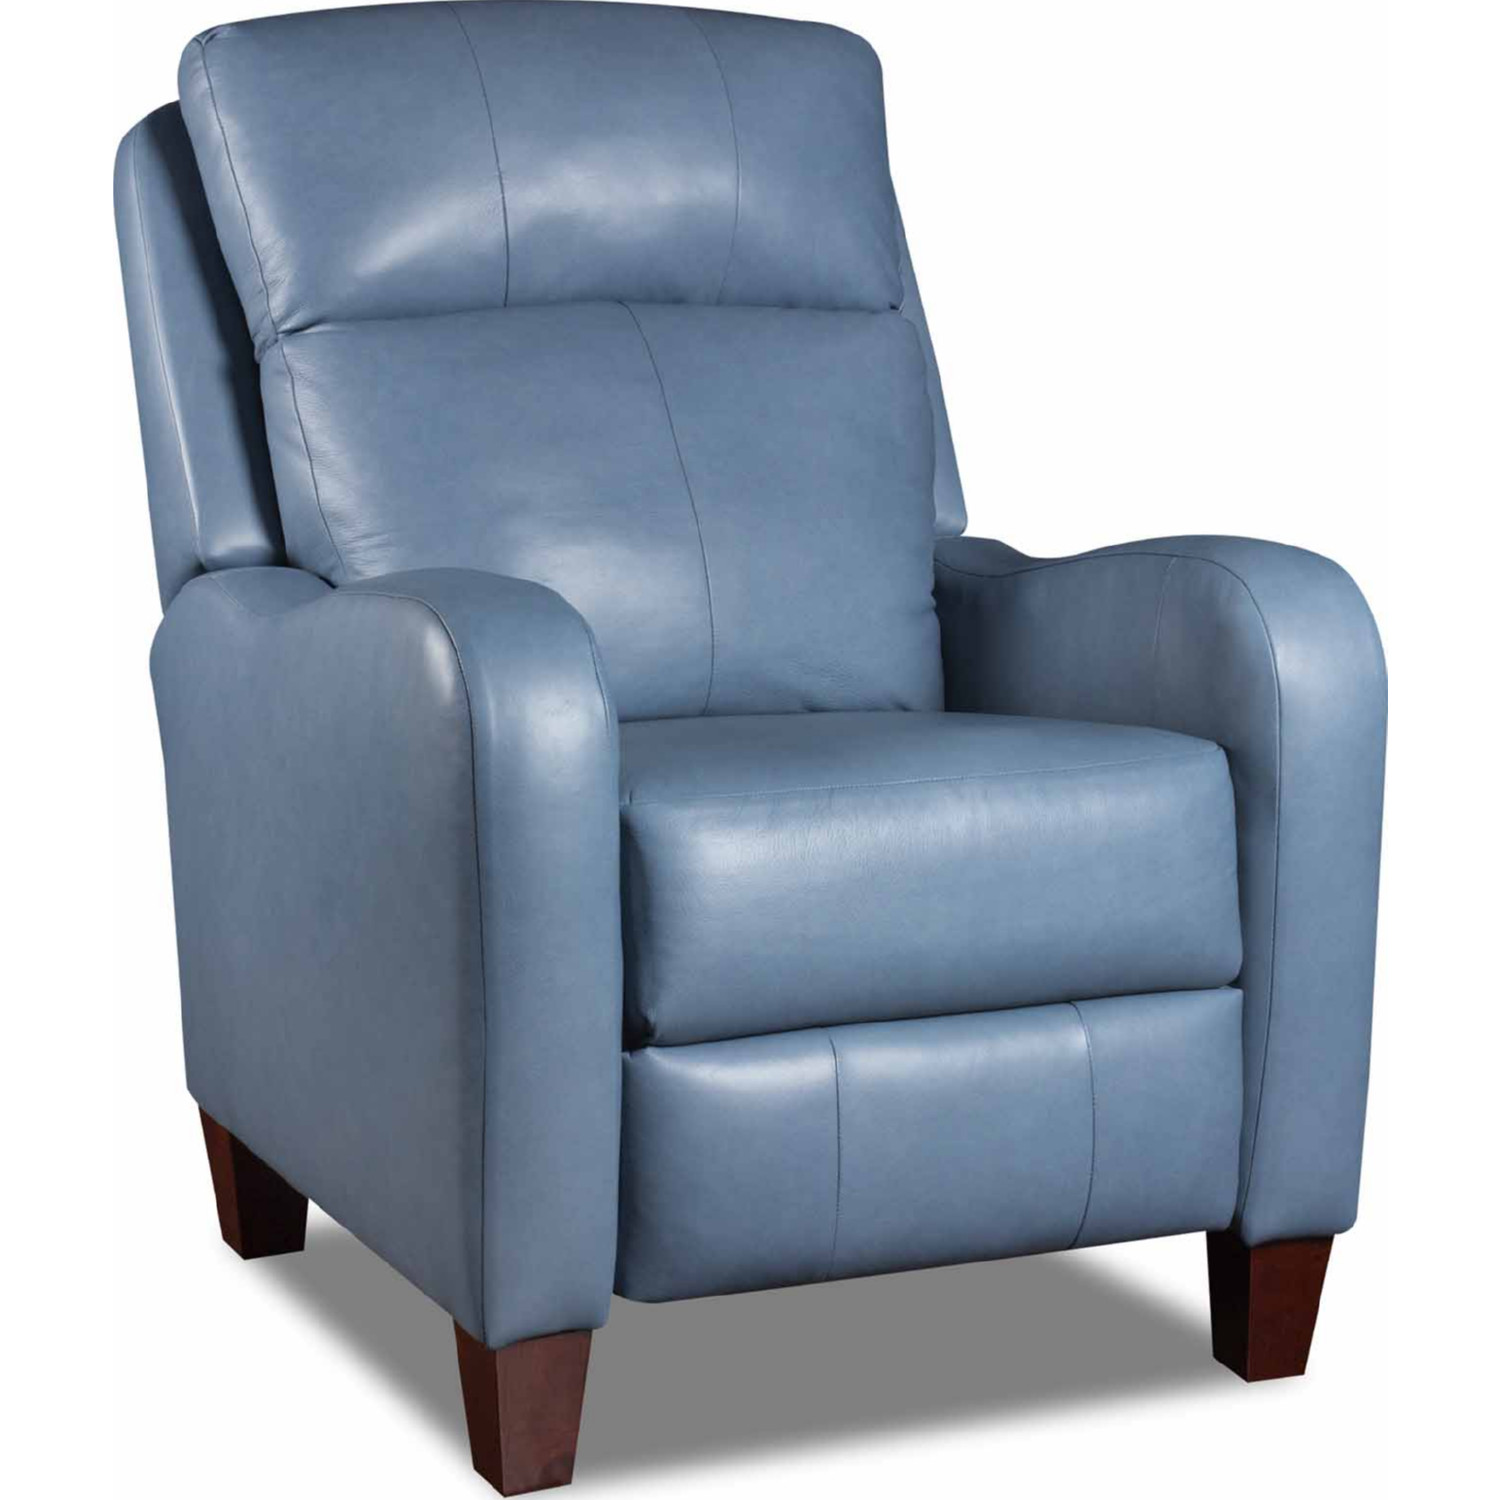 Prestige Hi Leg Manual Recliner, Light Blue Leather Chair